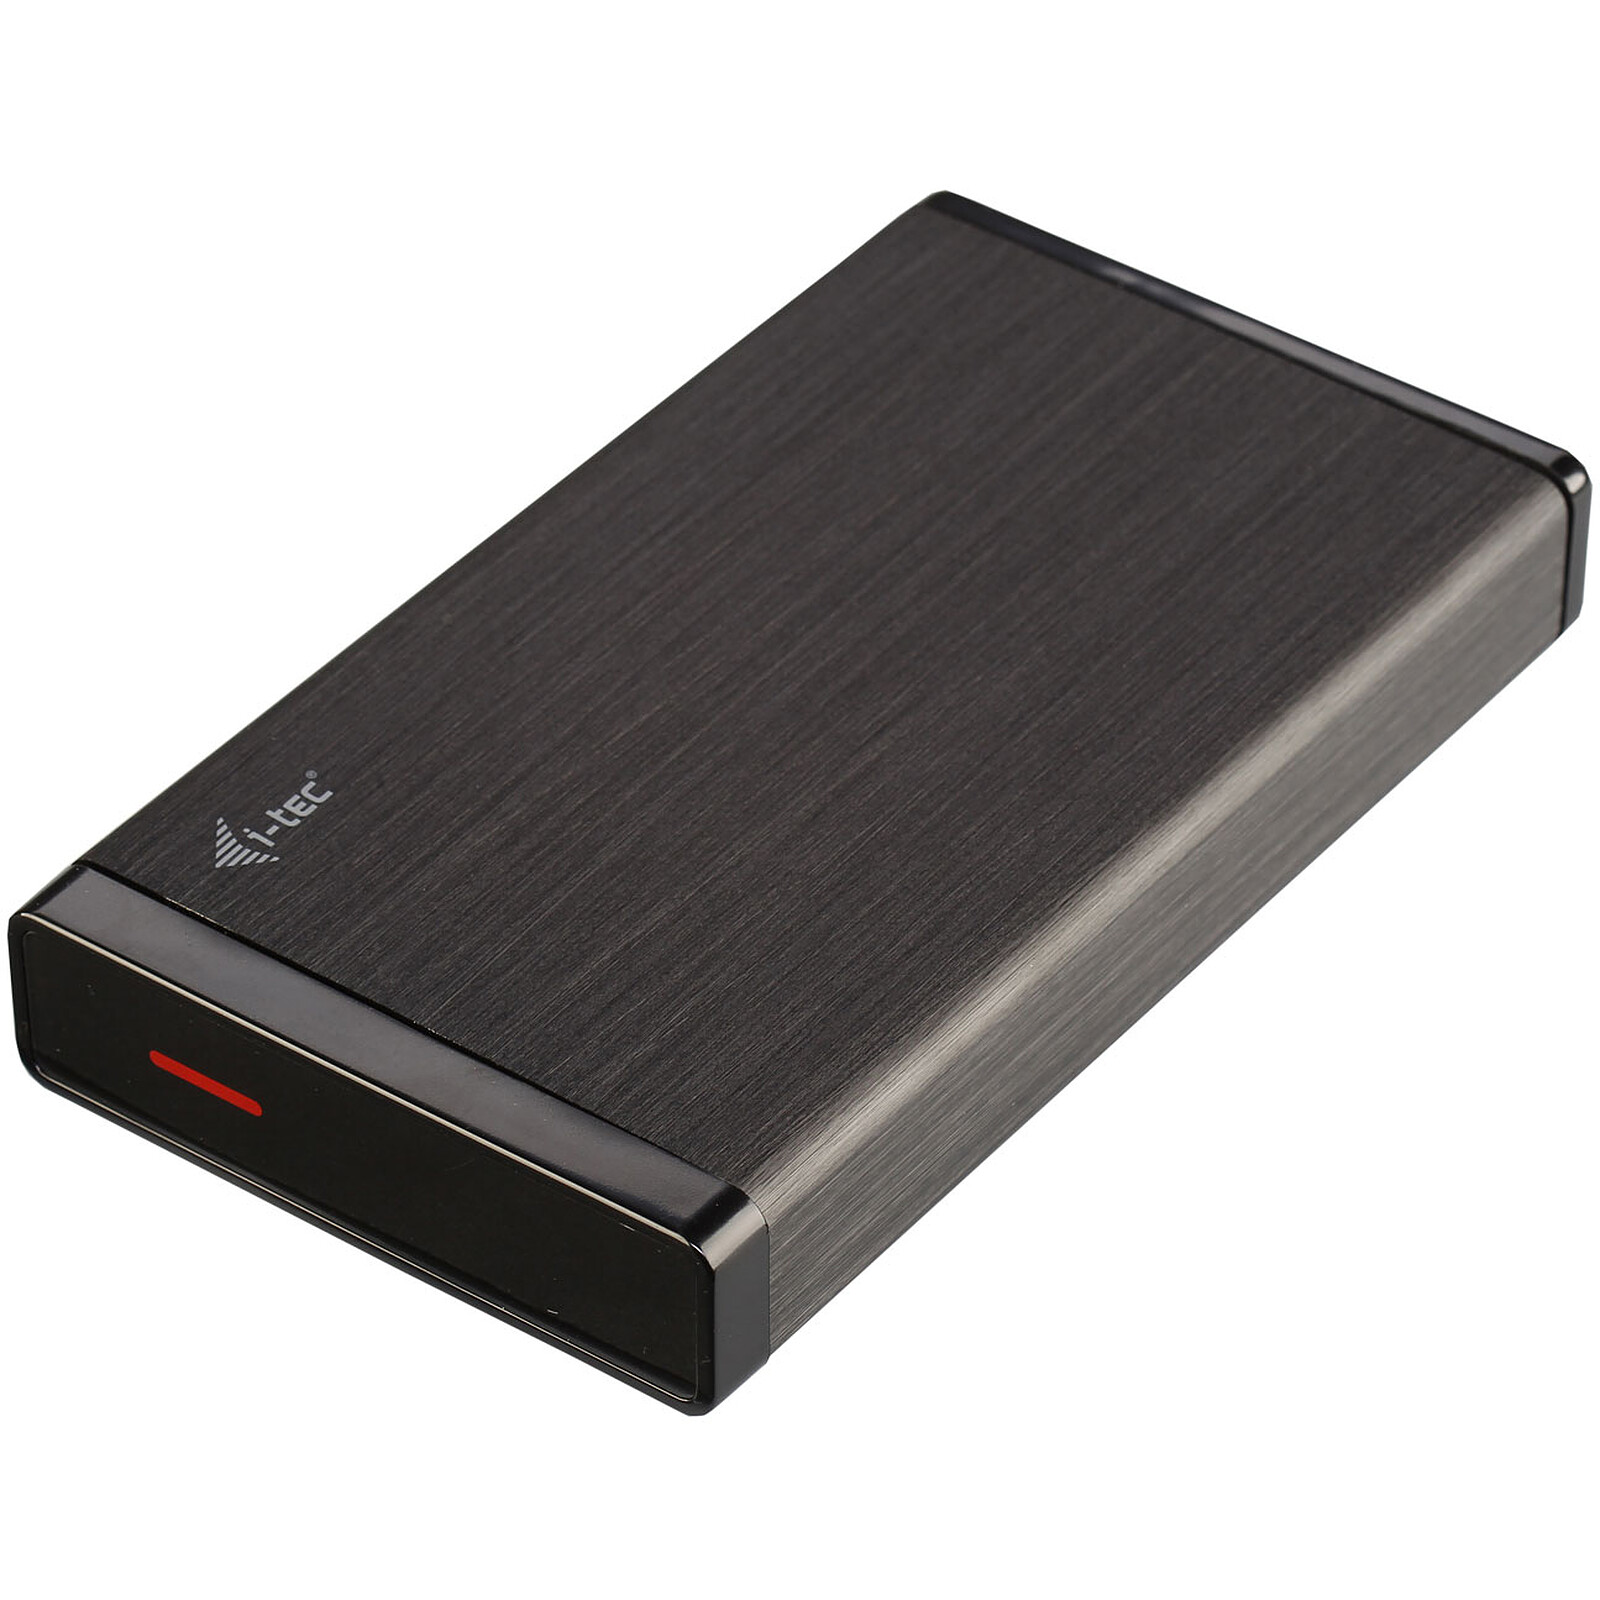 i-tec MySafe USB 3.0 Easy 2.5 External Case Noir - Boîtier disque dur -  Garantie 3 ans LDLC